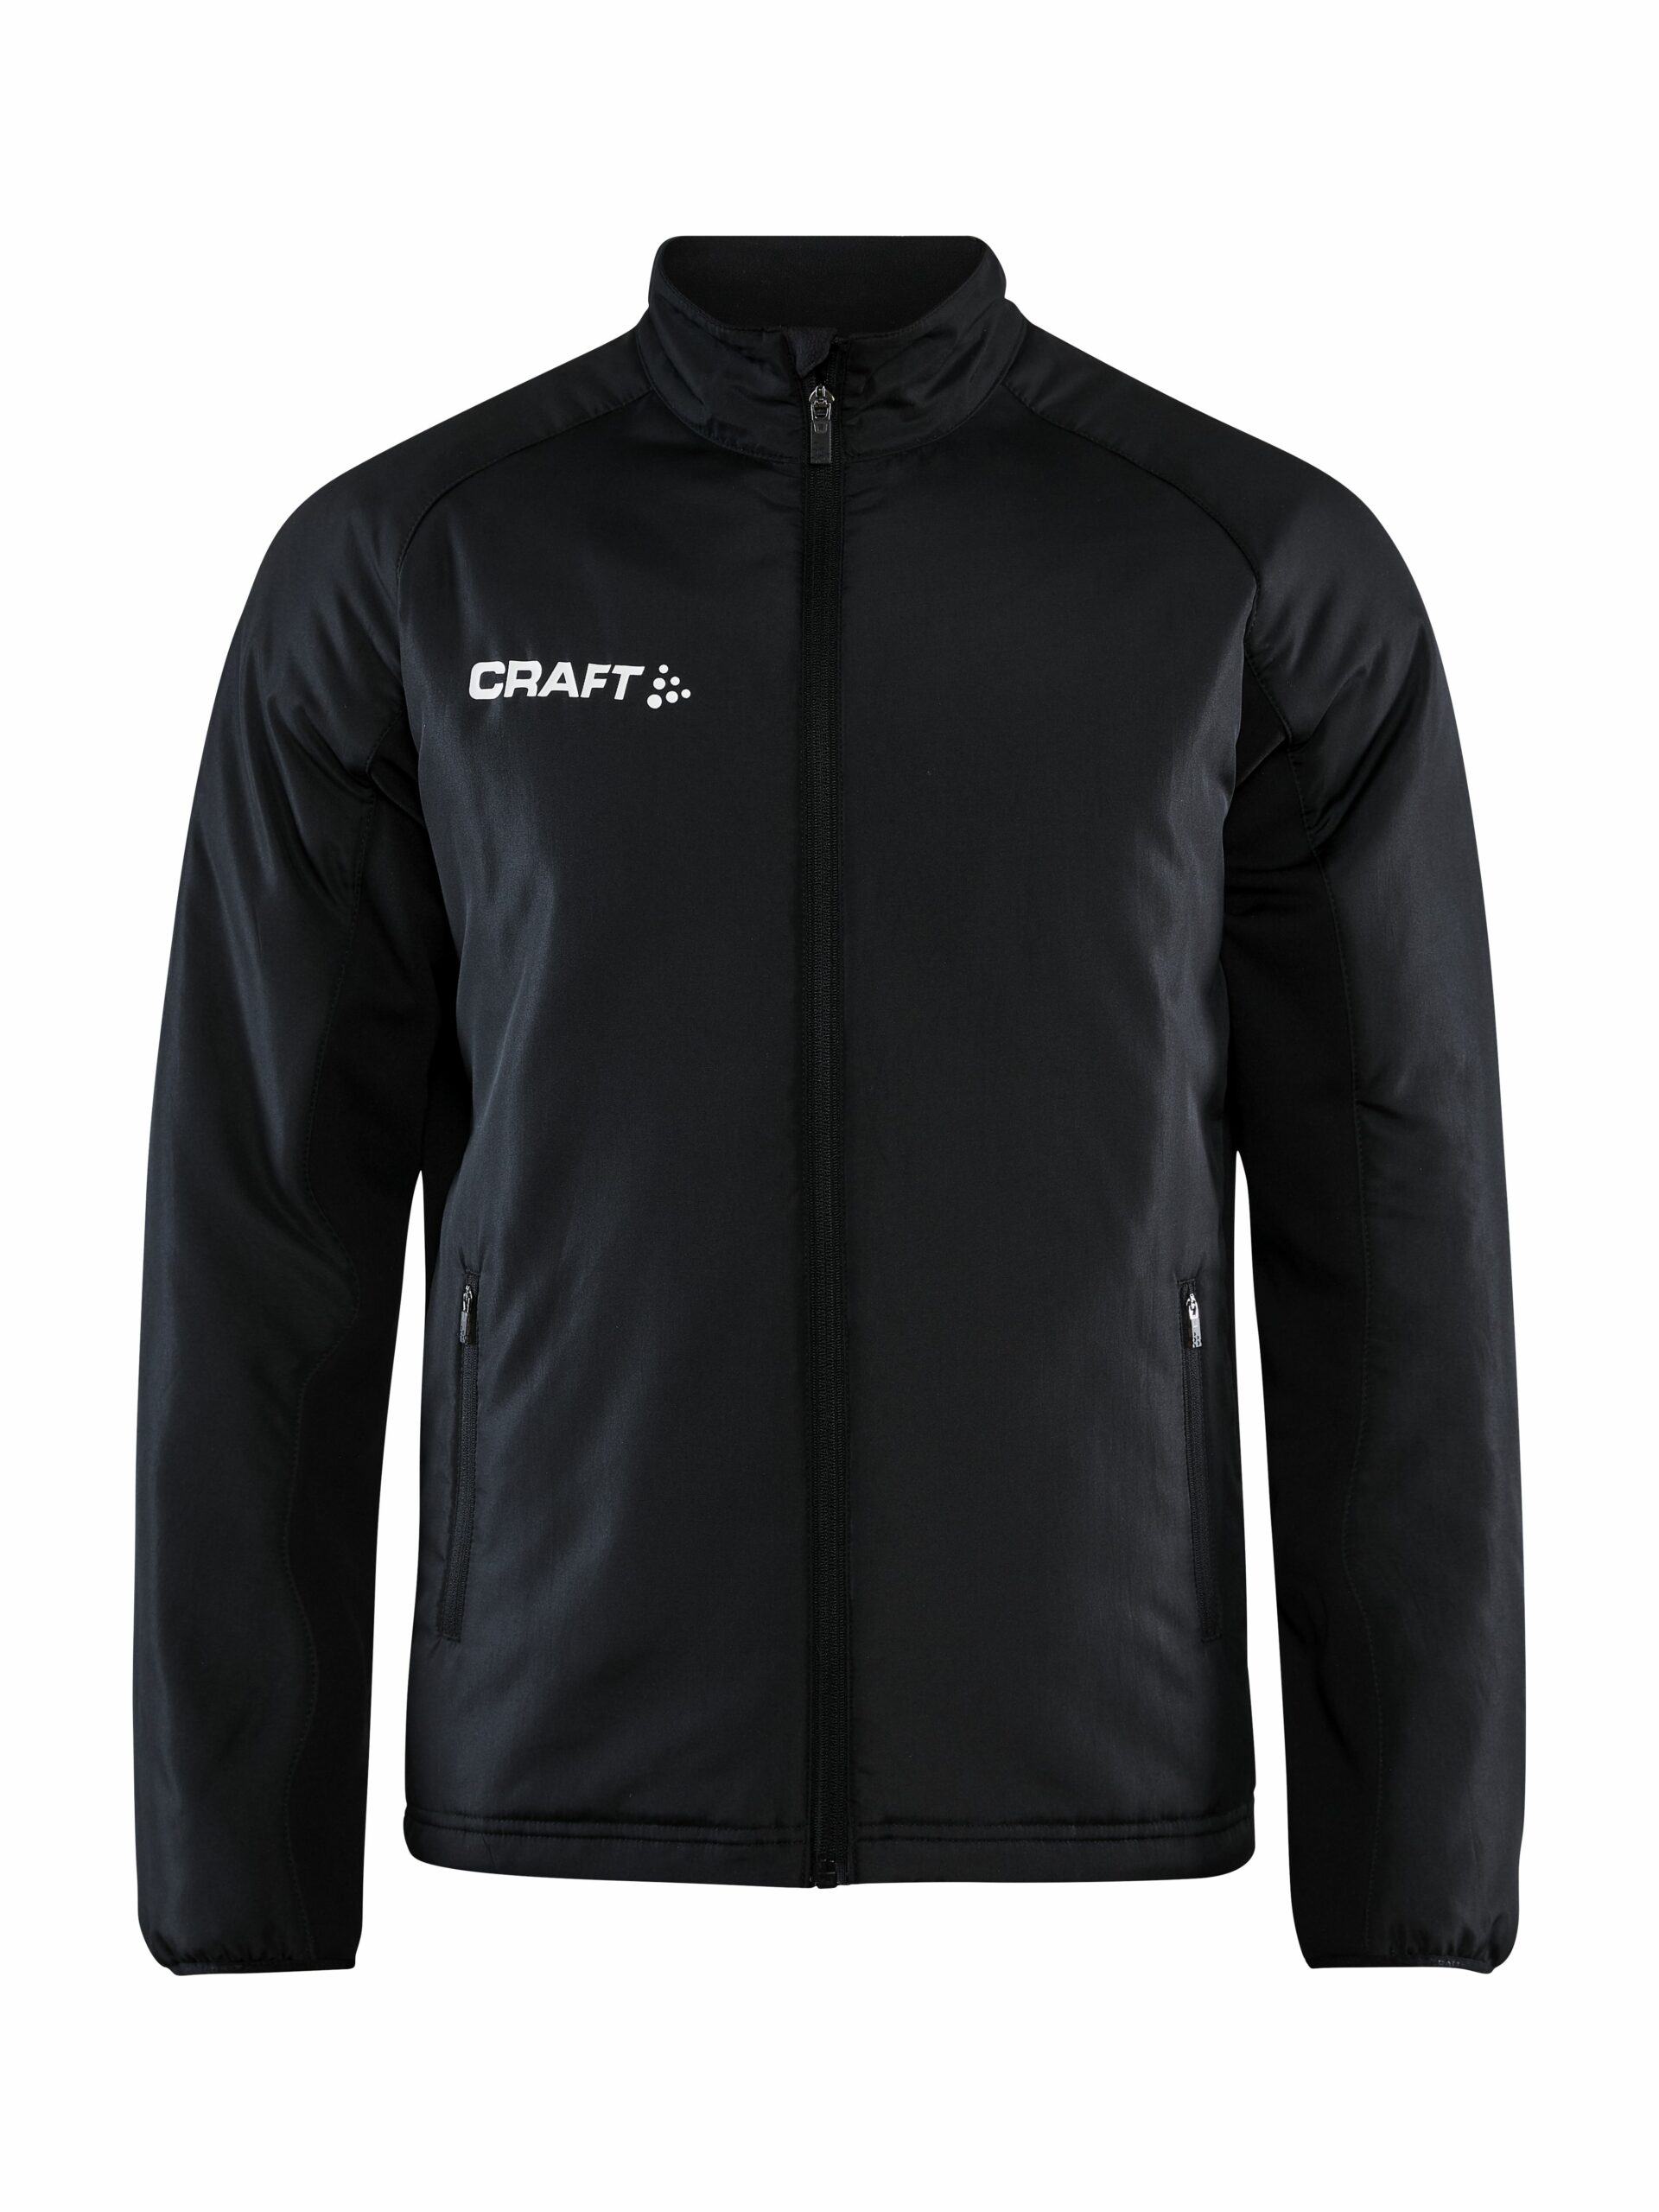 Craft - Jacket Warm JR - Black 122/128